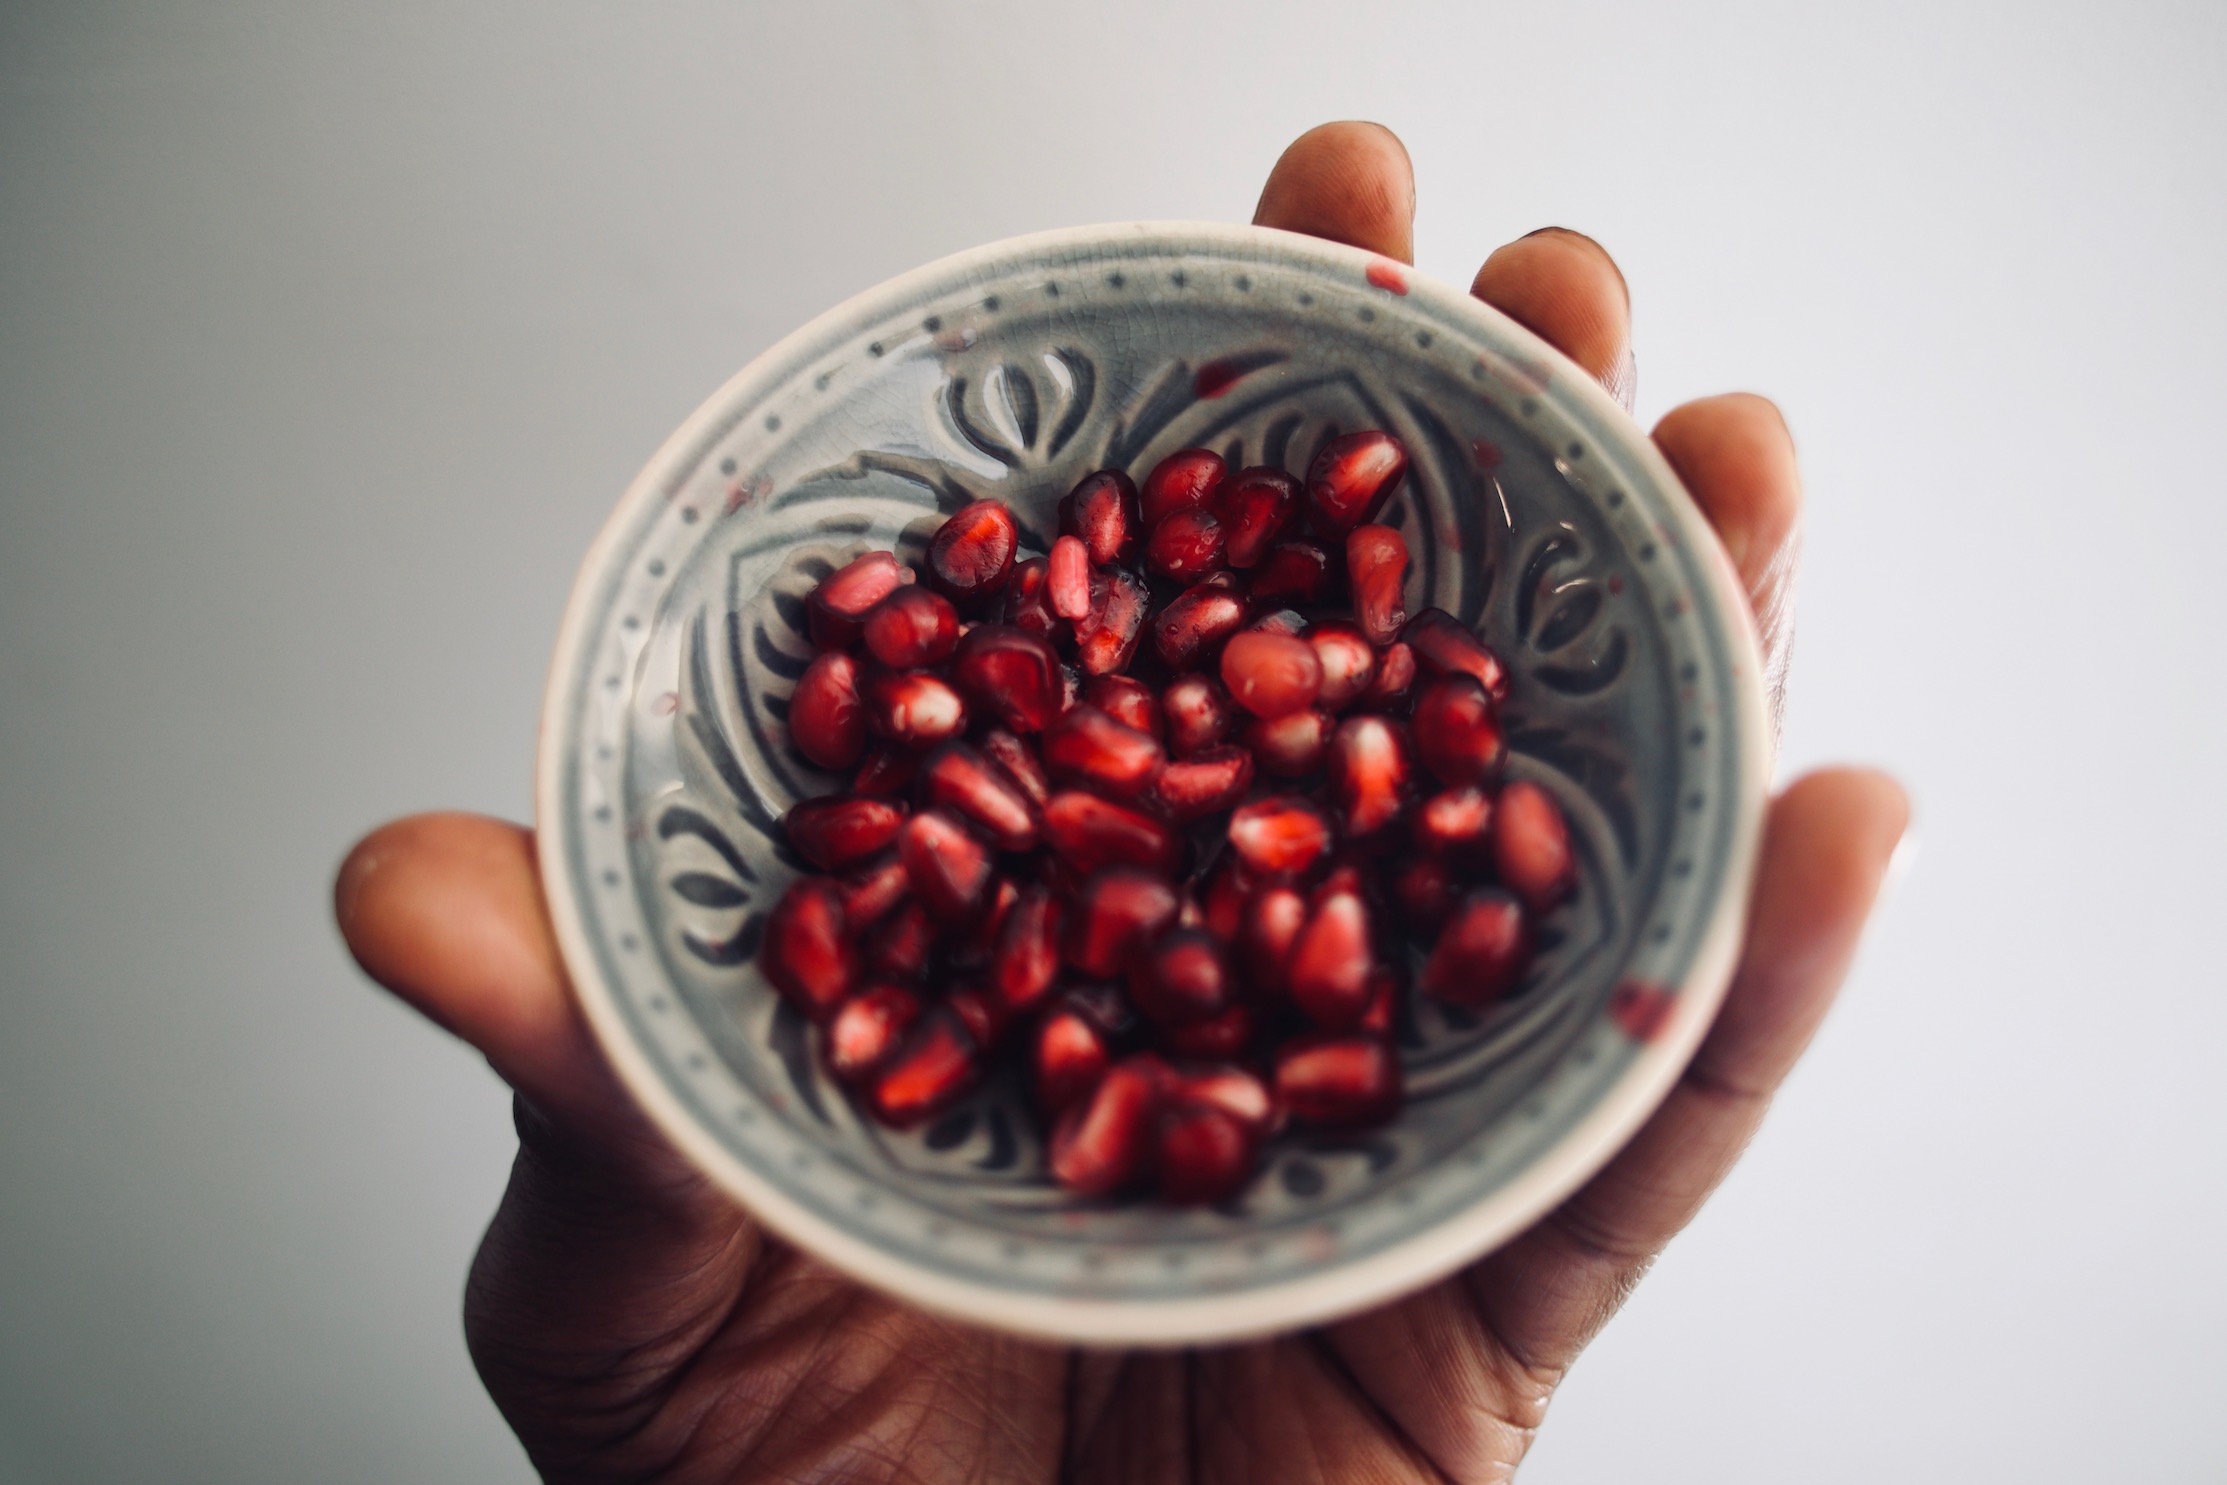 Pomegranate seeds - the Vitamin C superfood